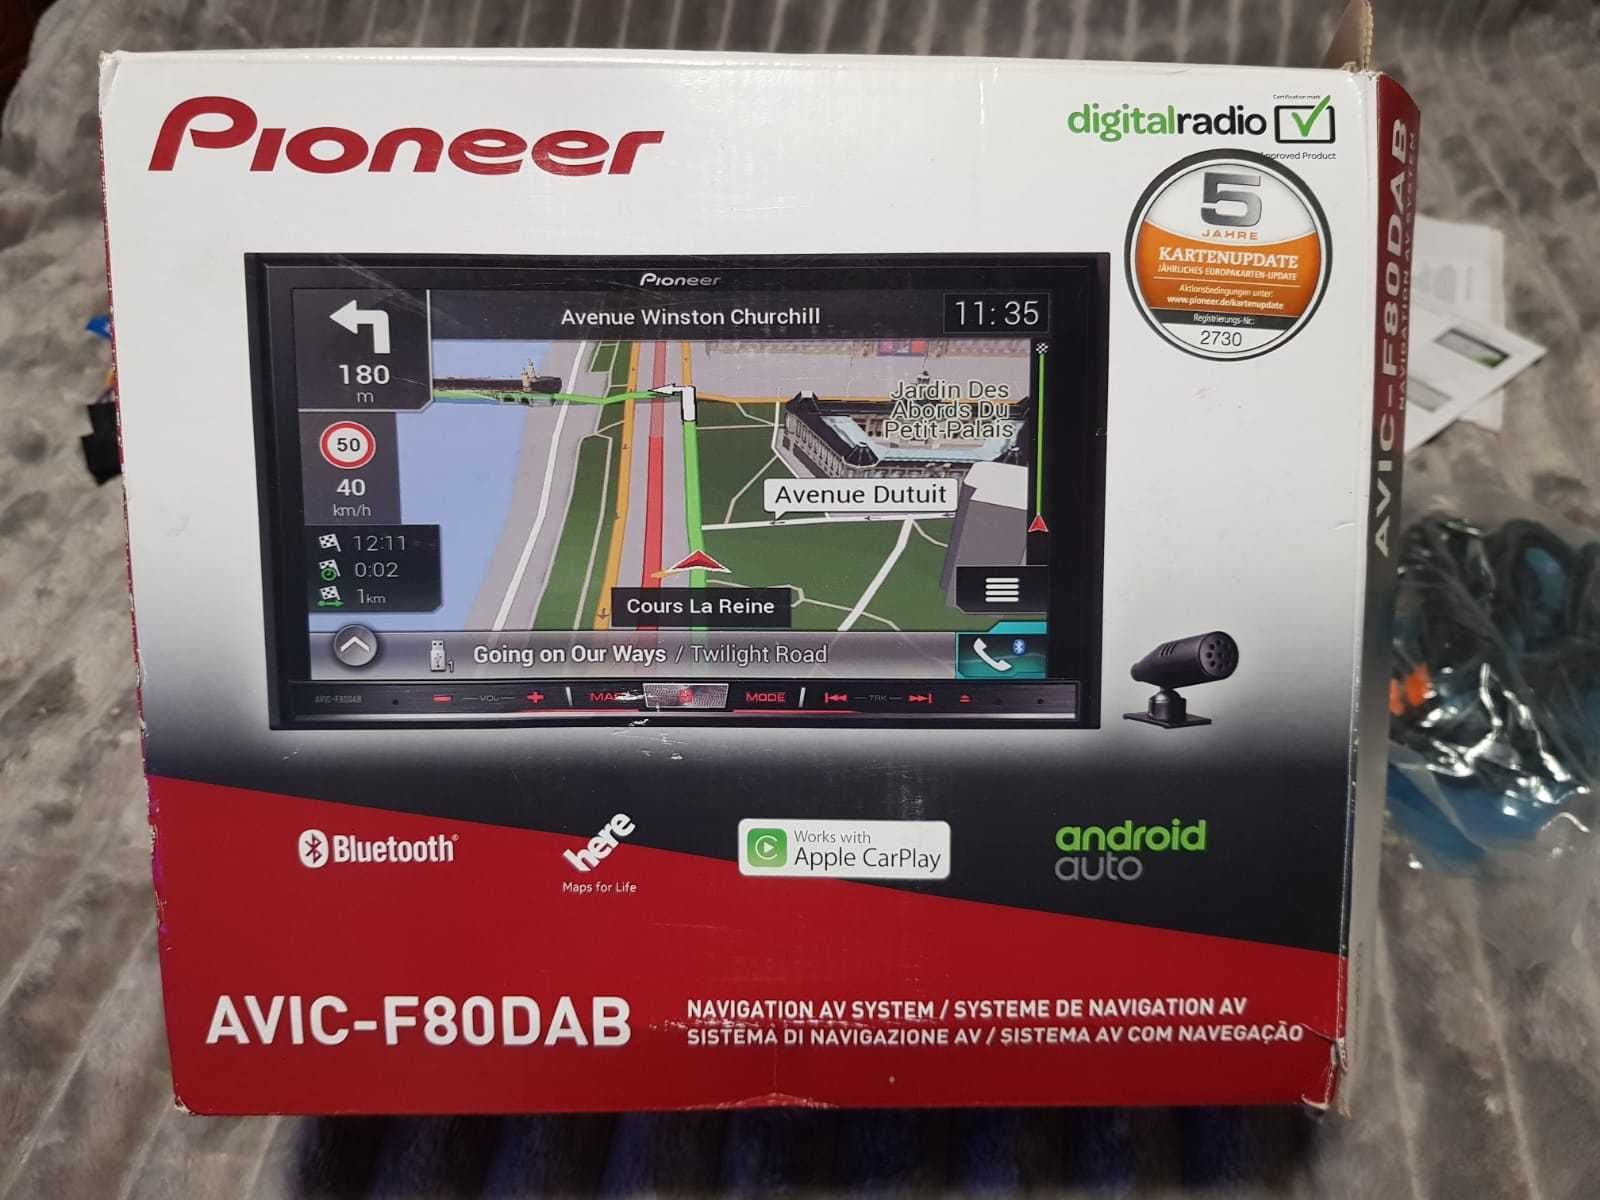 Navigatie PIONNER AVIC-F80DAB Android auto.Usor negociabil!